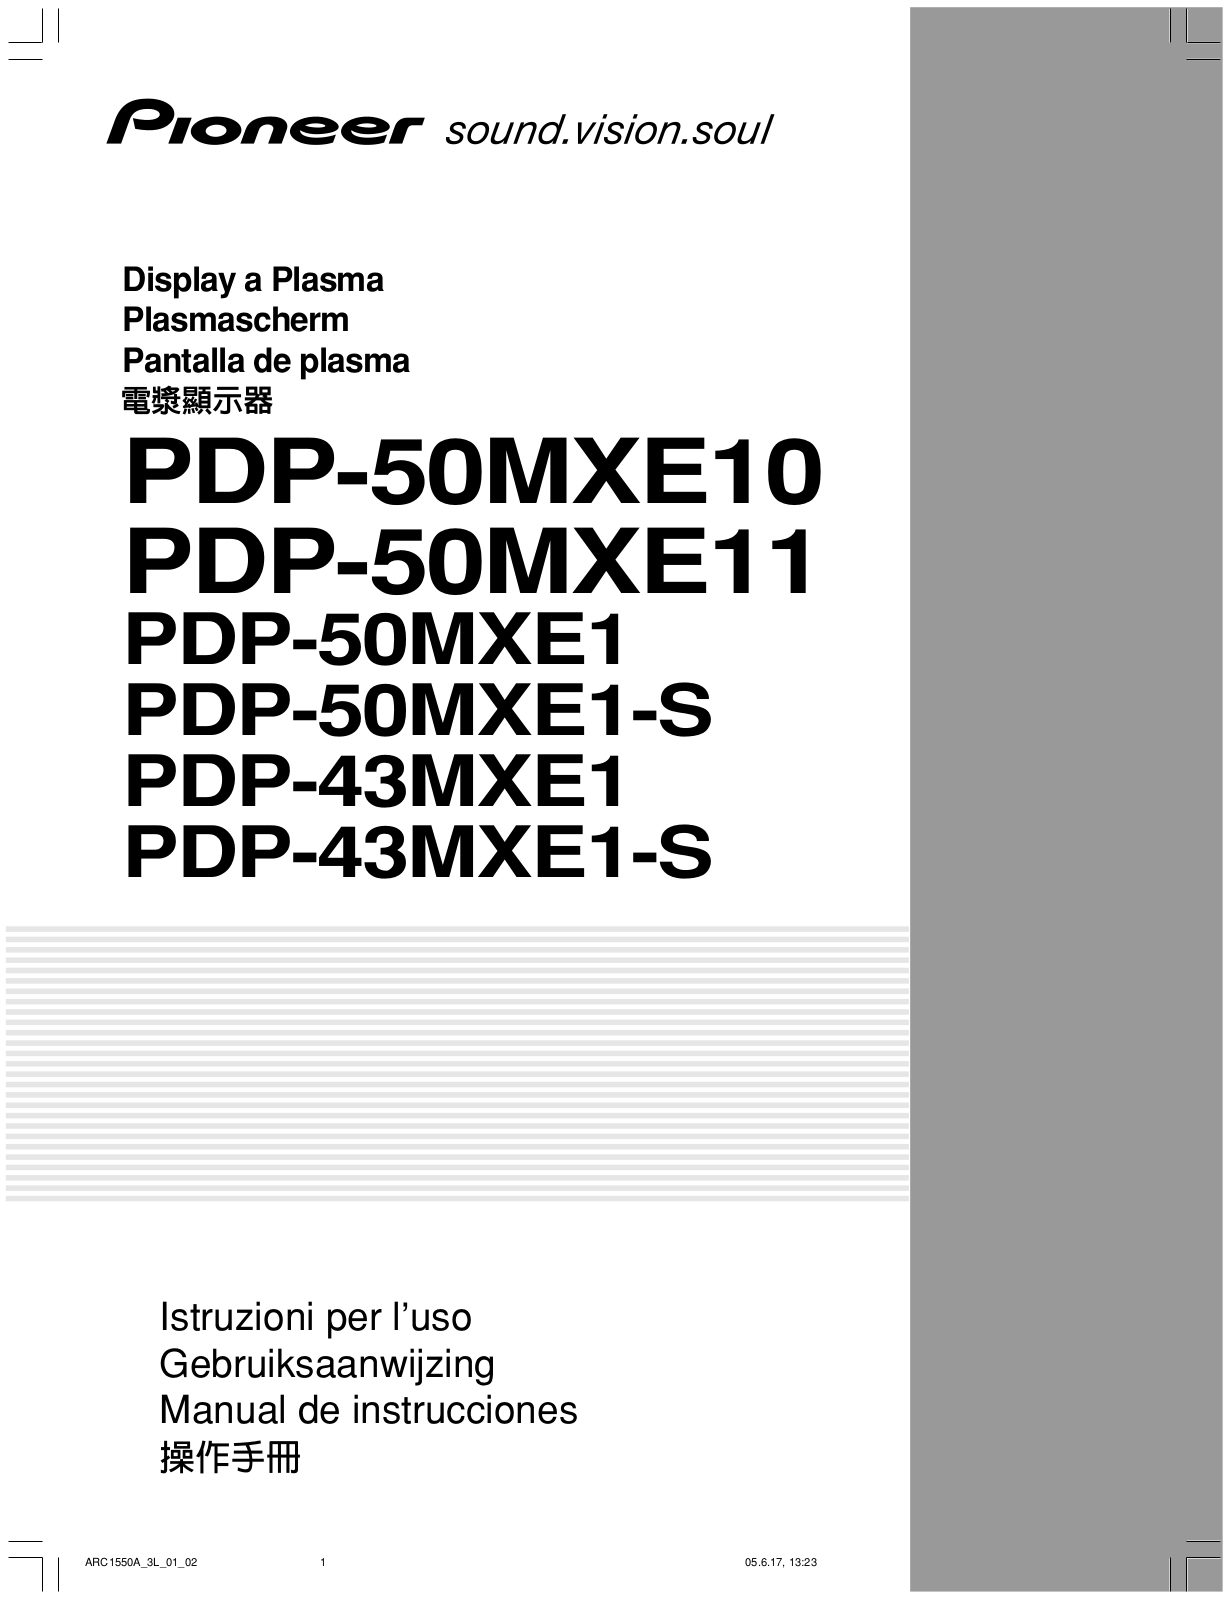 Pioneer PDP-50MXE11, PDP-50MXE1-S, PDP-50MXE1, PDP-43MXE1-S, PDP-50MXE10 Manual